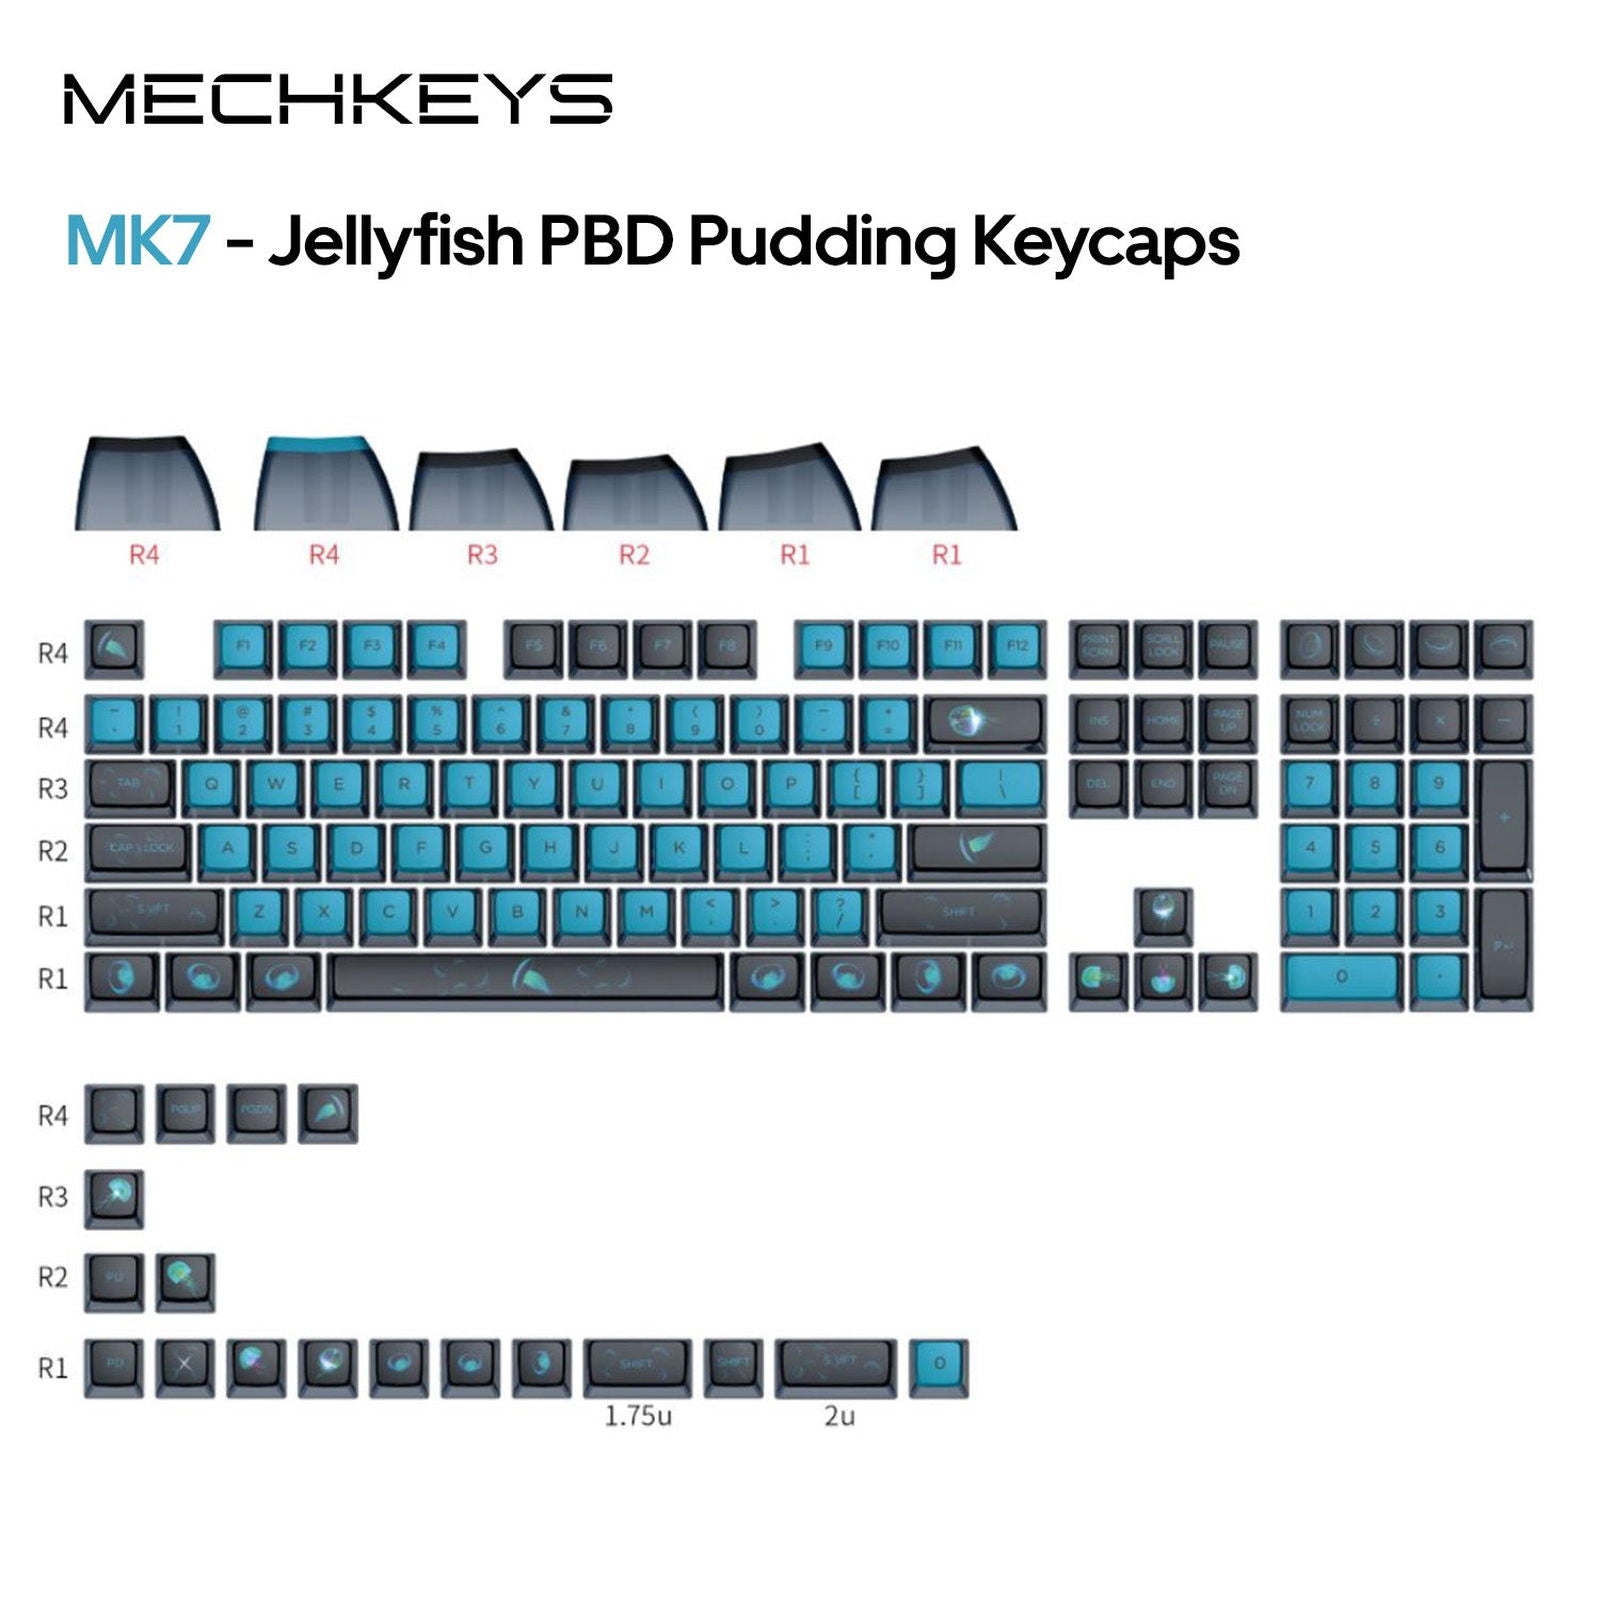 OVERCLOCK MECHKEYS Jellyfish PBT Pudding Keycaps - OVERCLOCK Computer